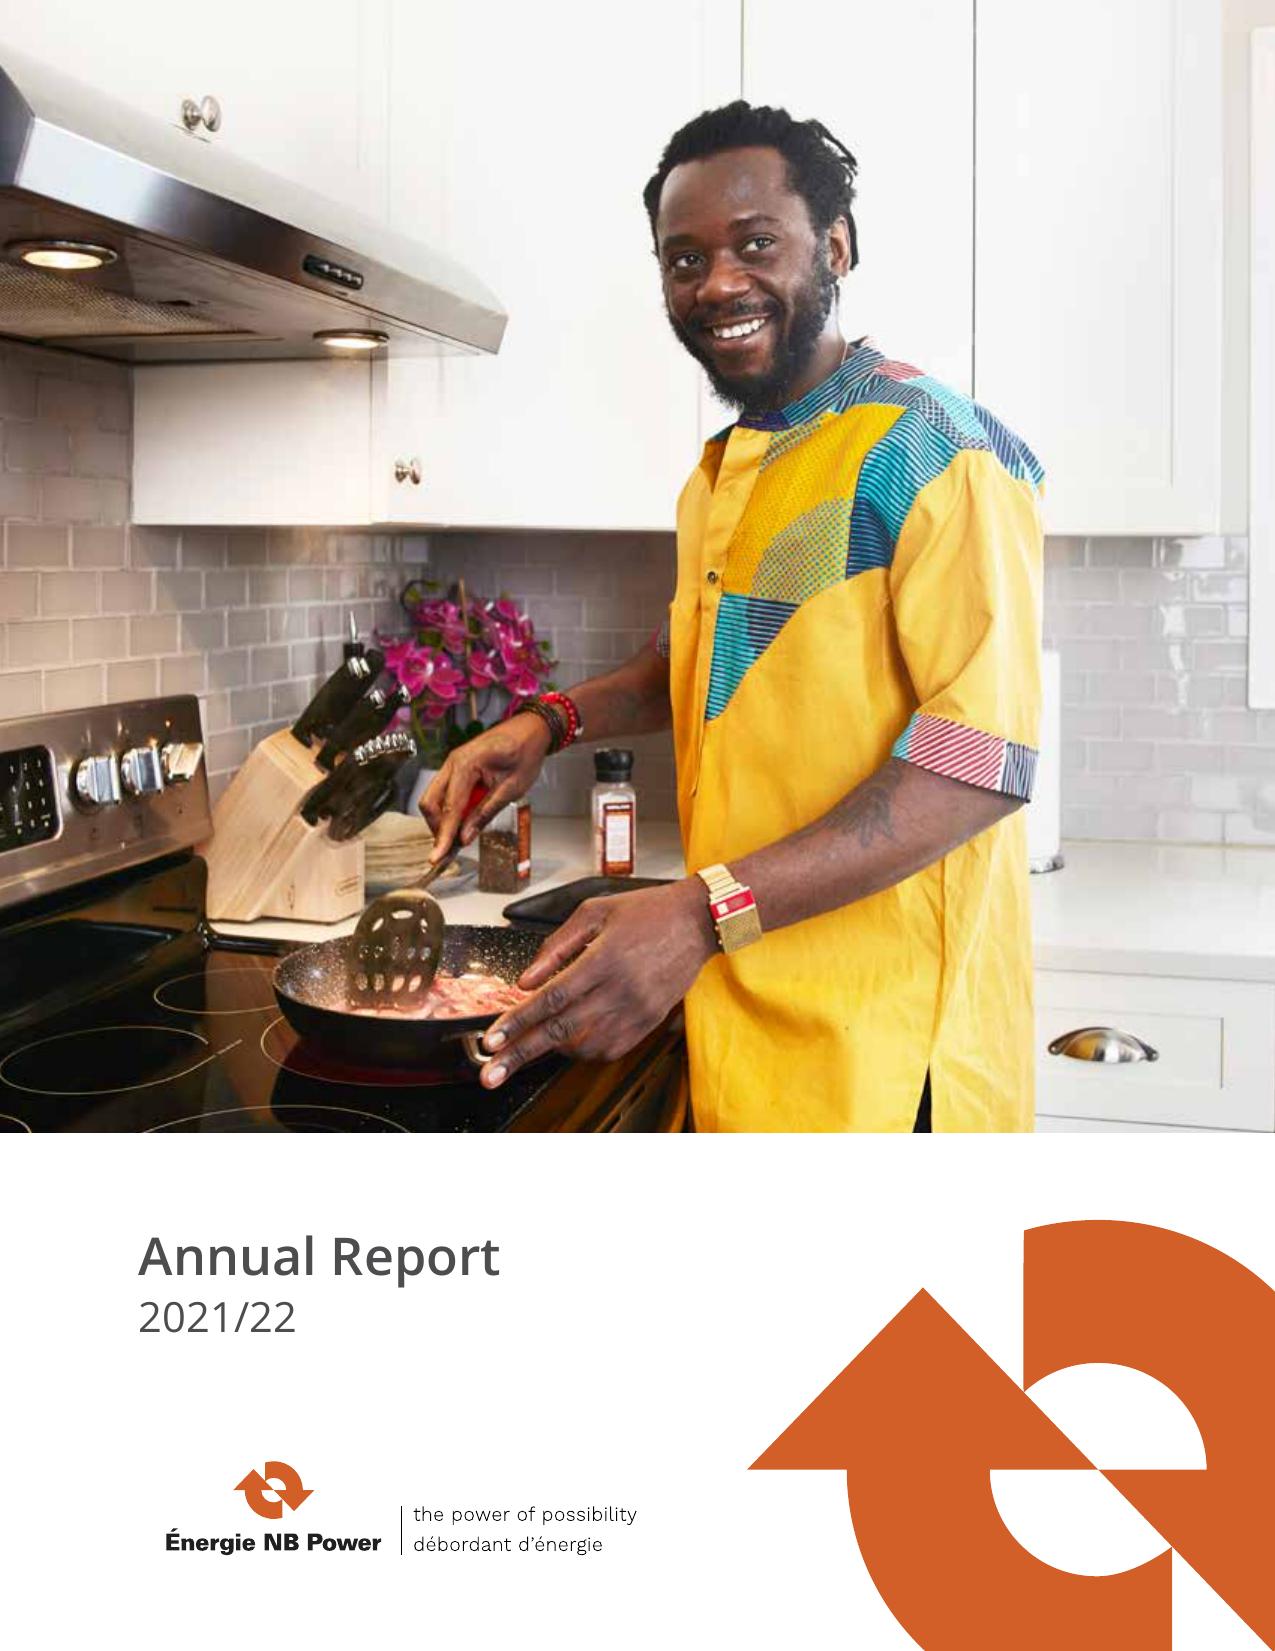 GOV.NL 2022 Annual Report